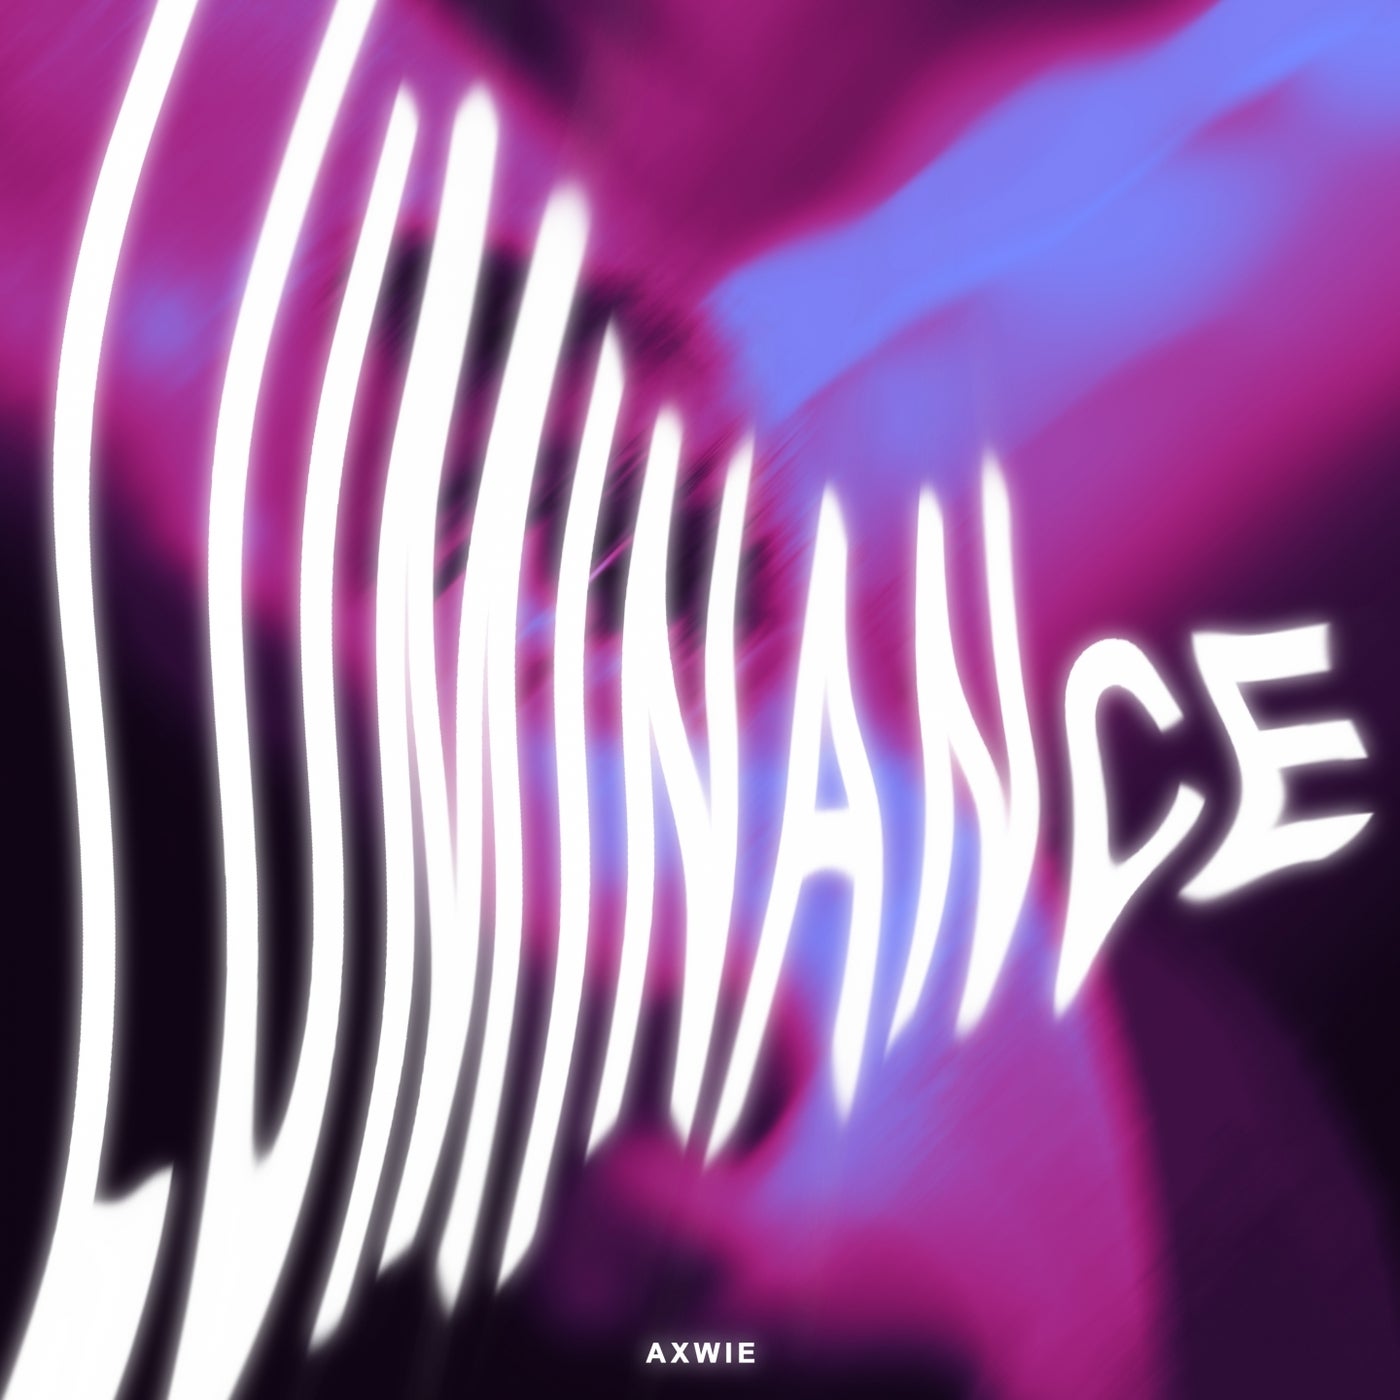 AXWIE & DXNT L13, AXWIE - LUMINANCE [Goost Music]